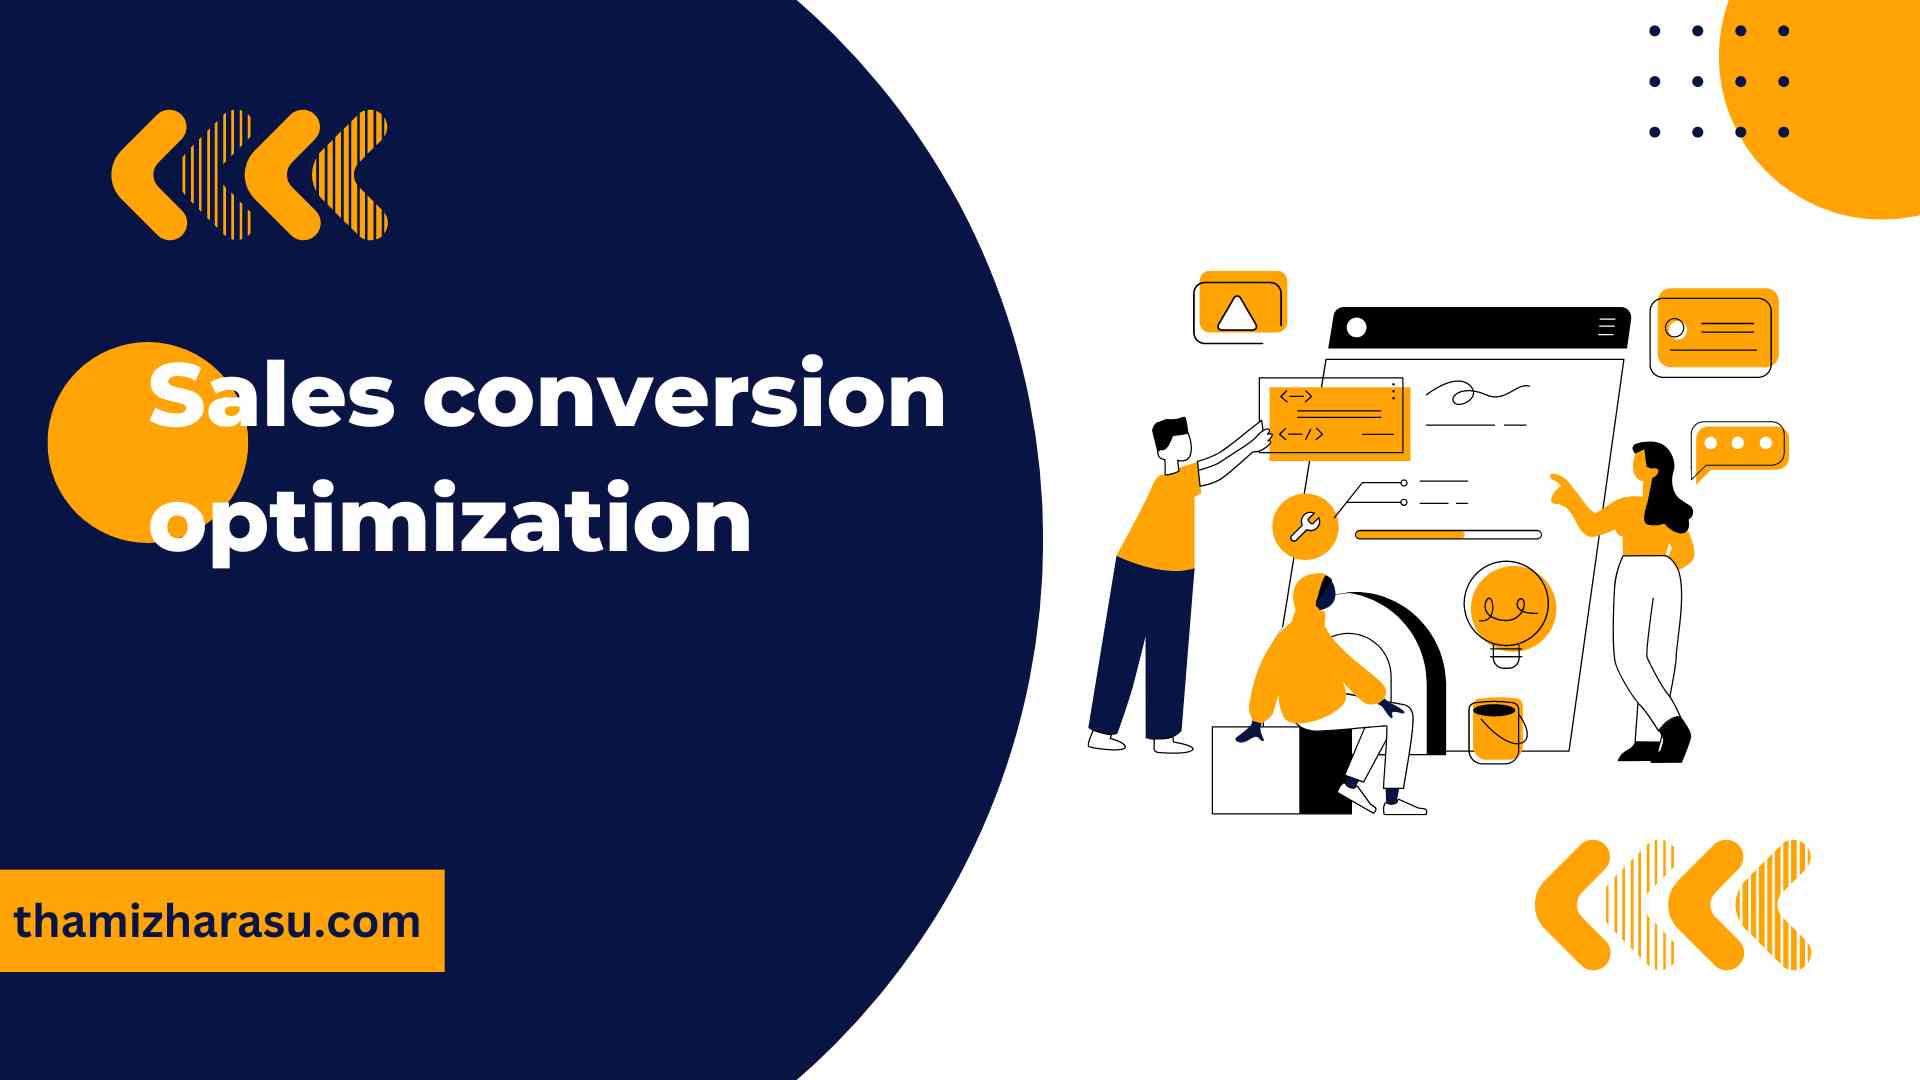 Sales conversion optimization